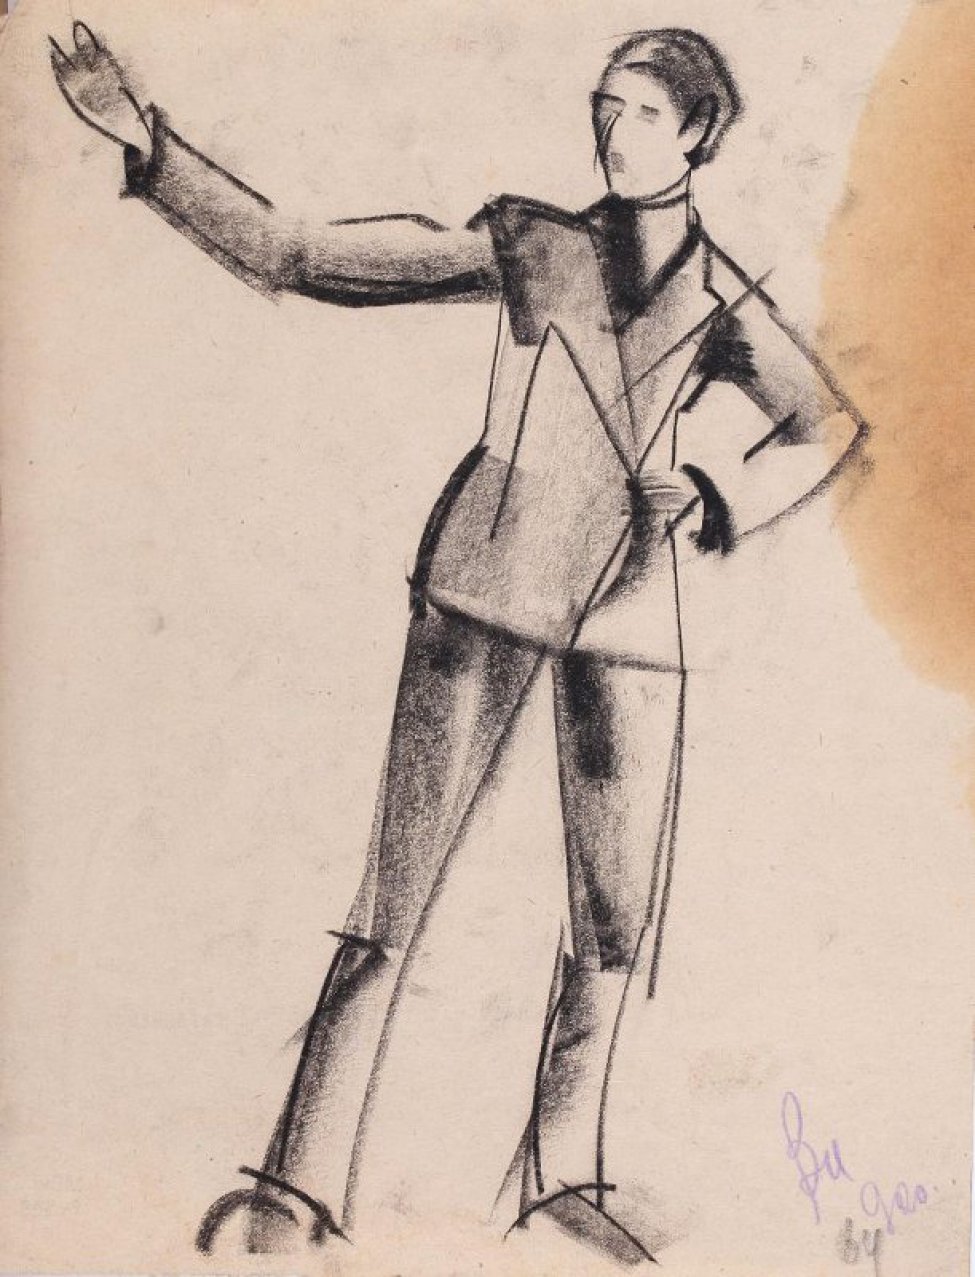 Изображен молодой мужчина в костюме в рост; корпус наклонен вправо; правая рука вытянута вперед, левая лежит на бедре.